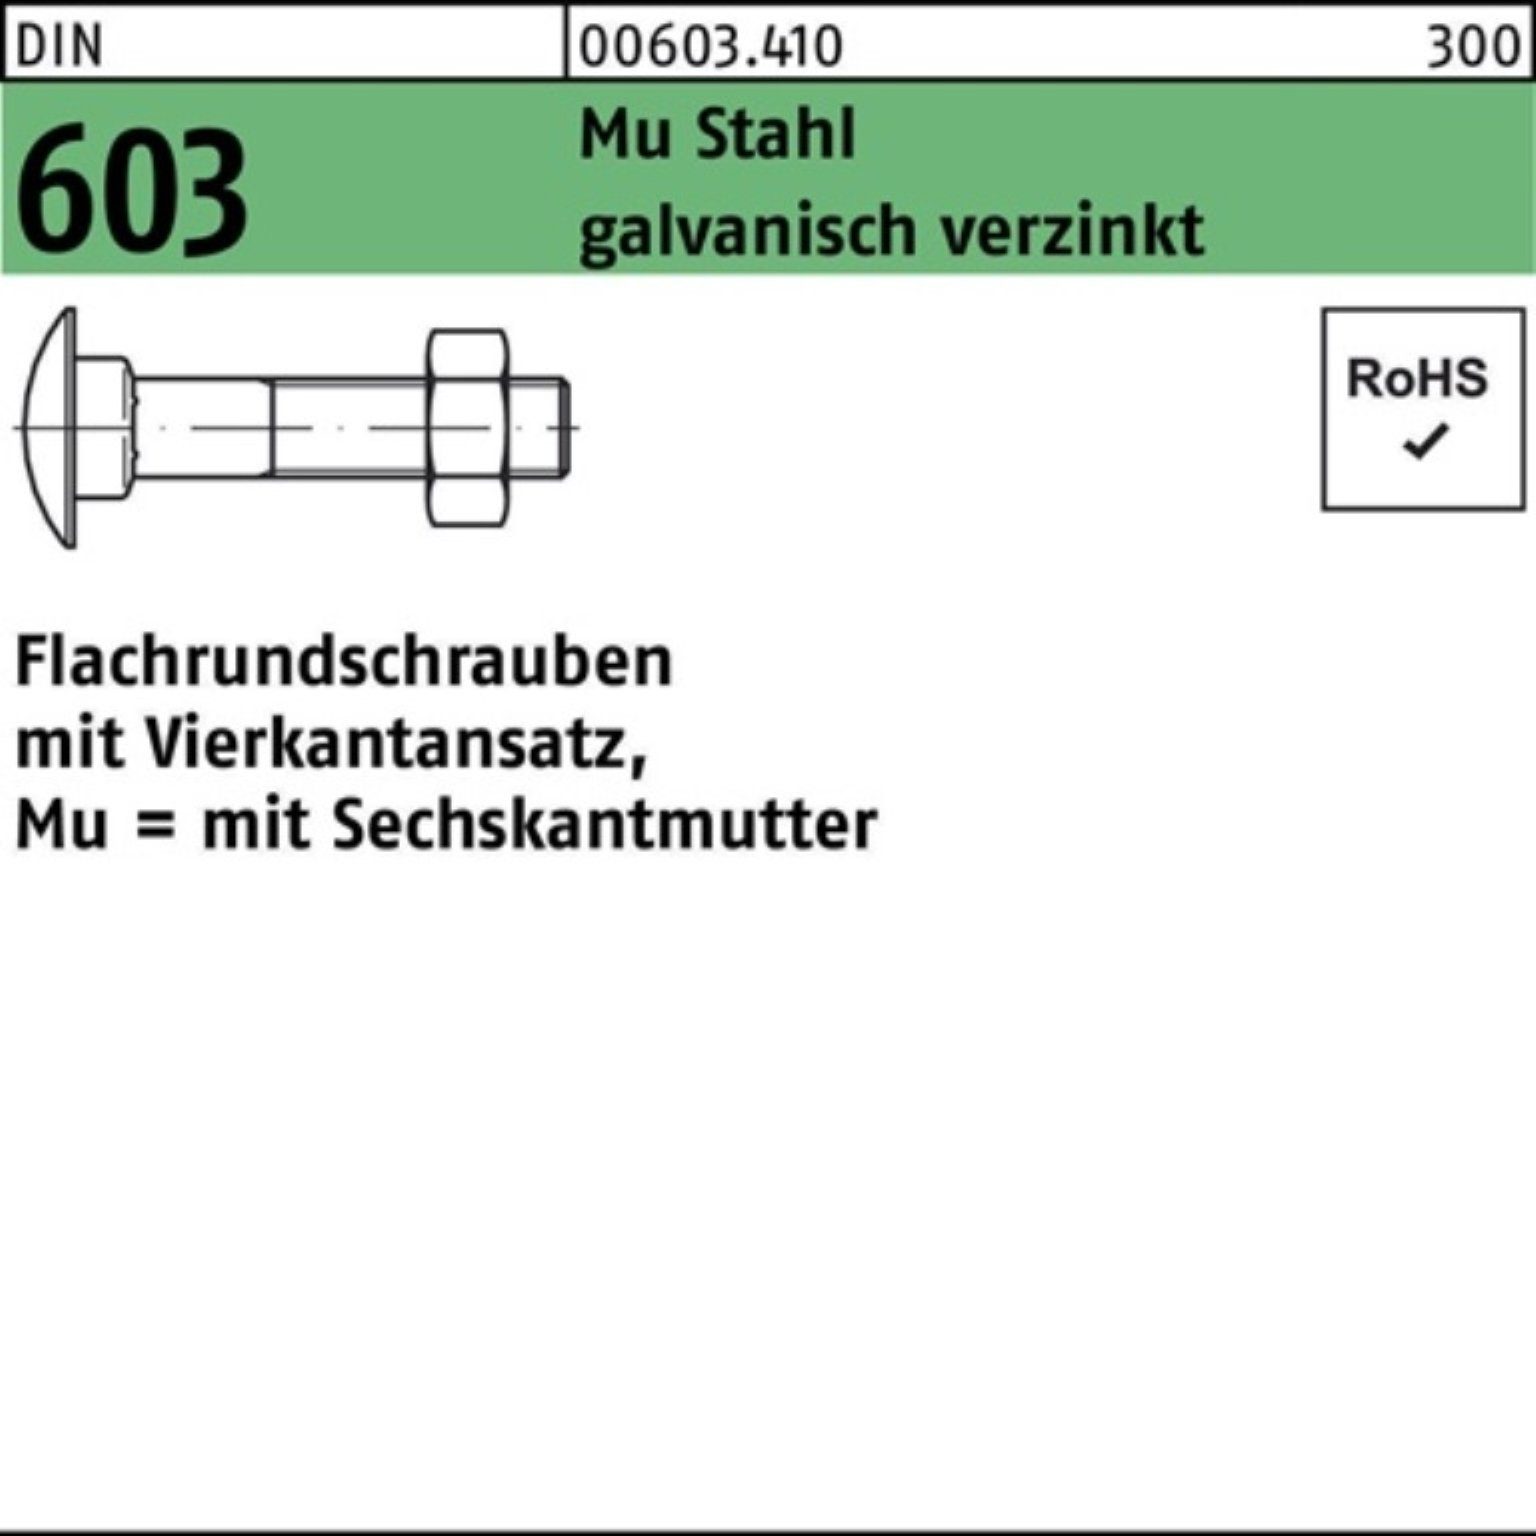 Pack Vierkantansatz/6-ktmutter DIN Reyher M20x80 100er 603 Flachrundschraube Schraube